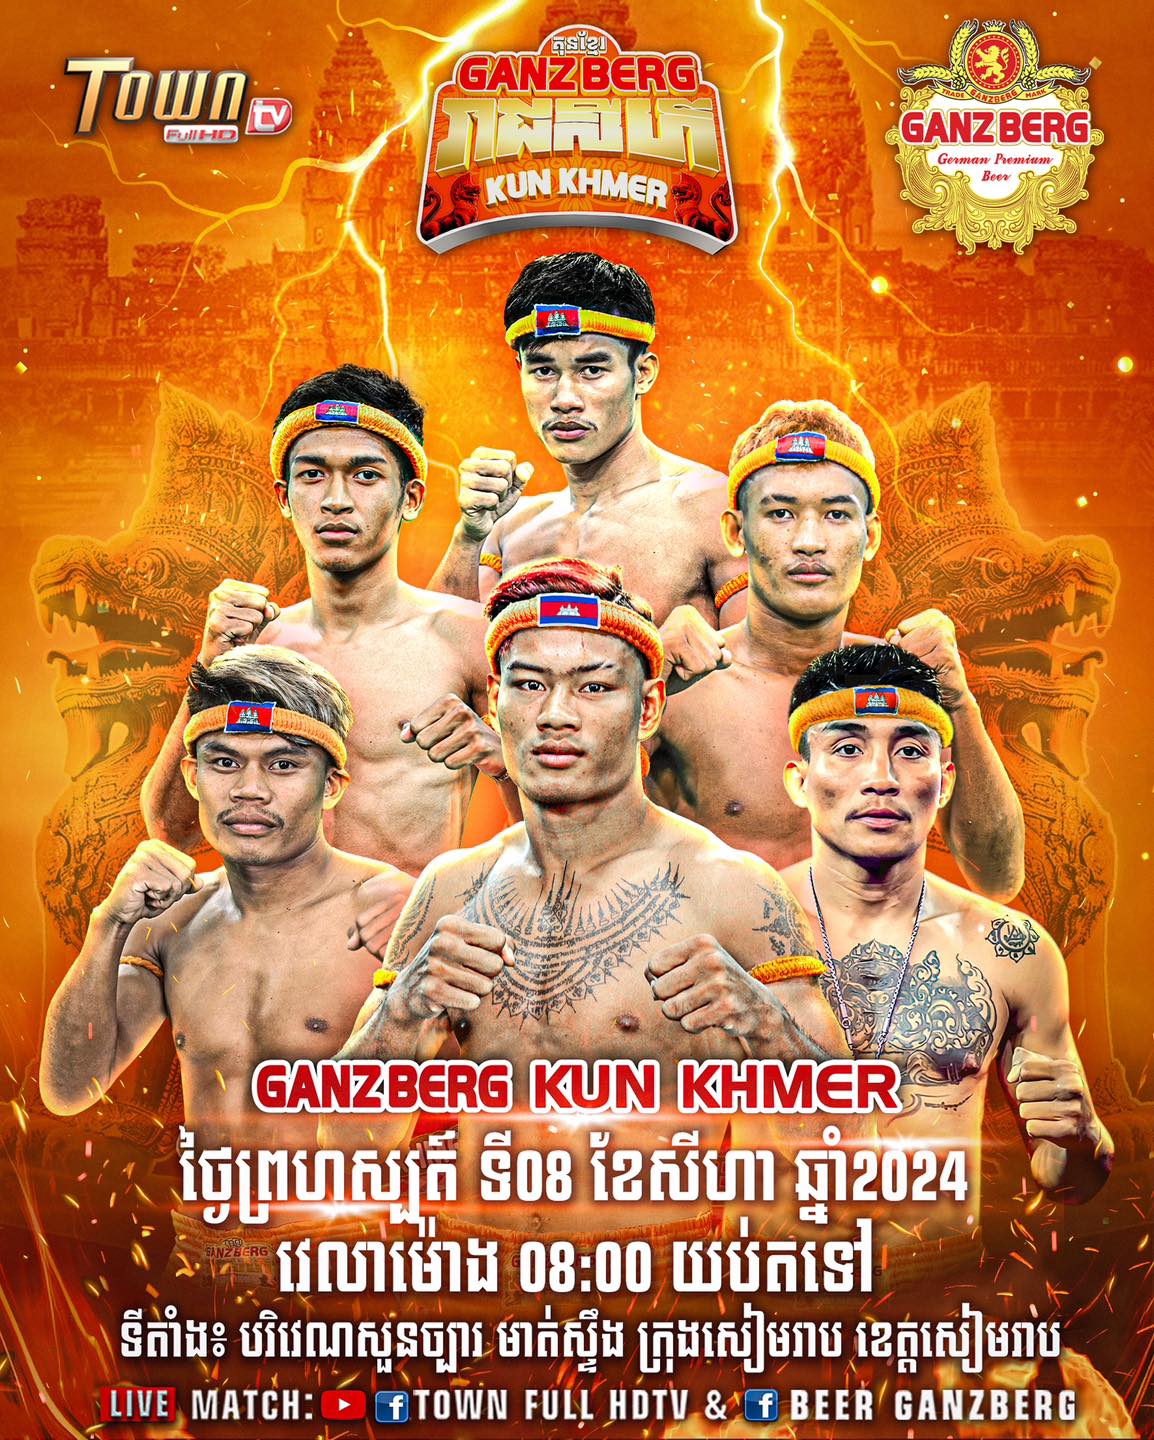 Kun Khmer is coming to Siem Reap!